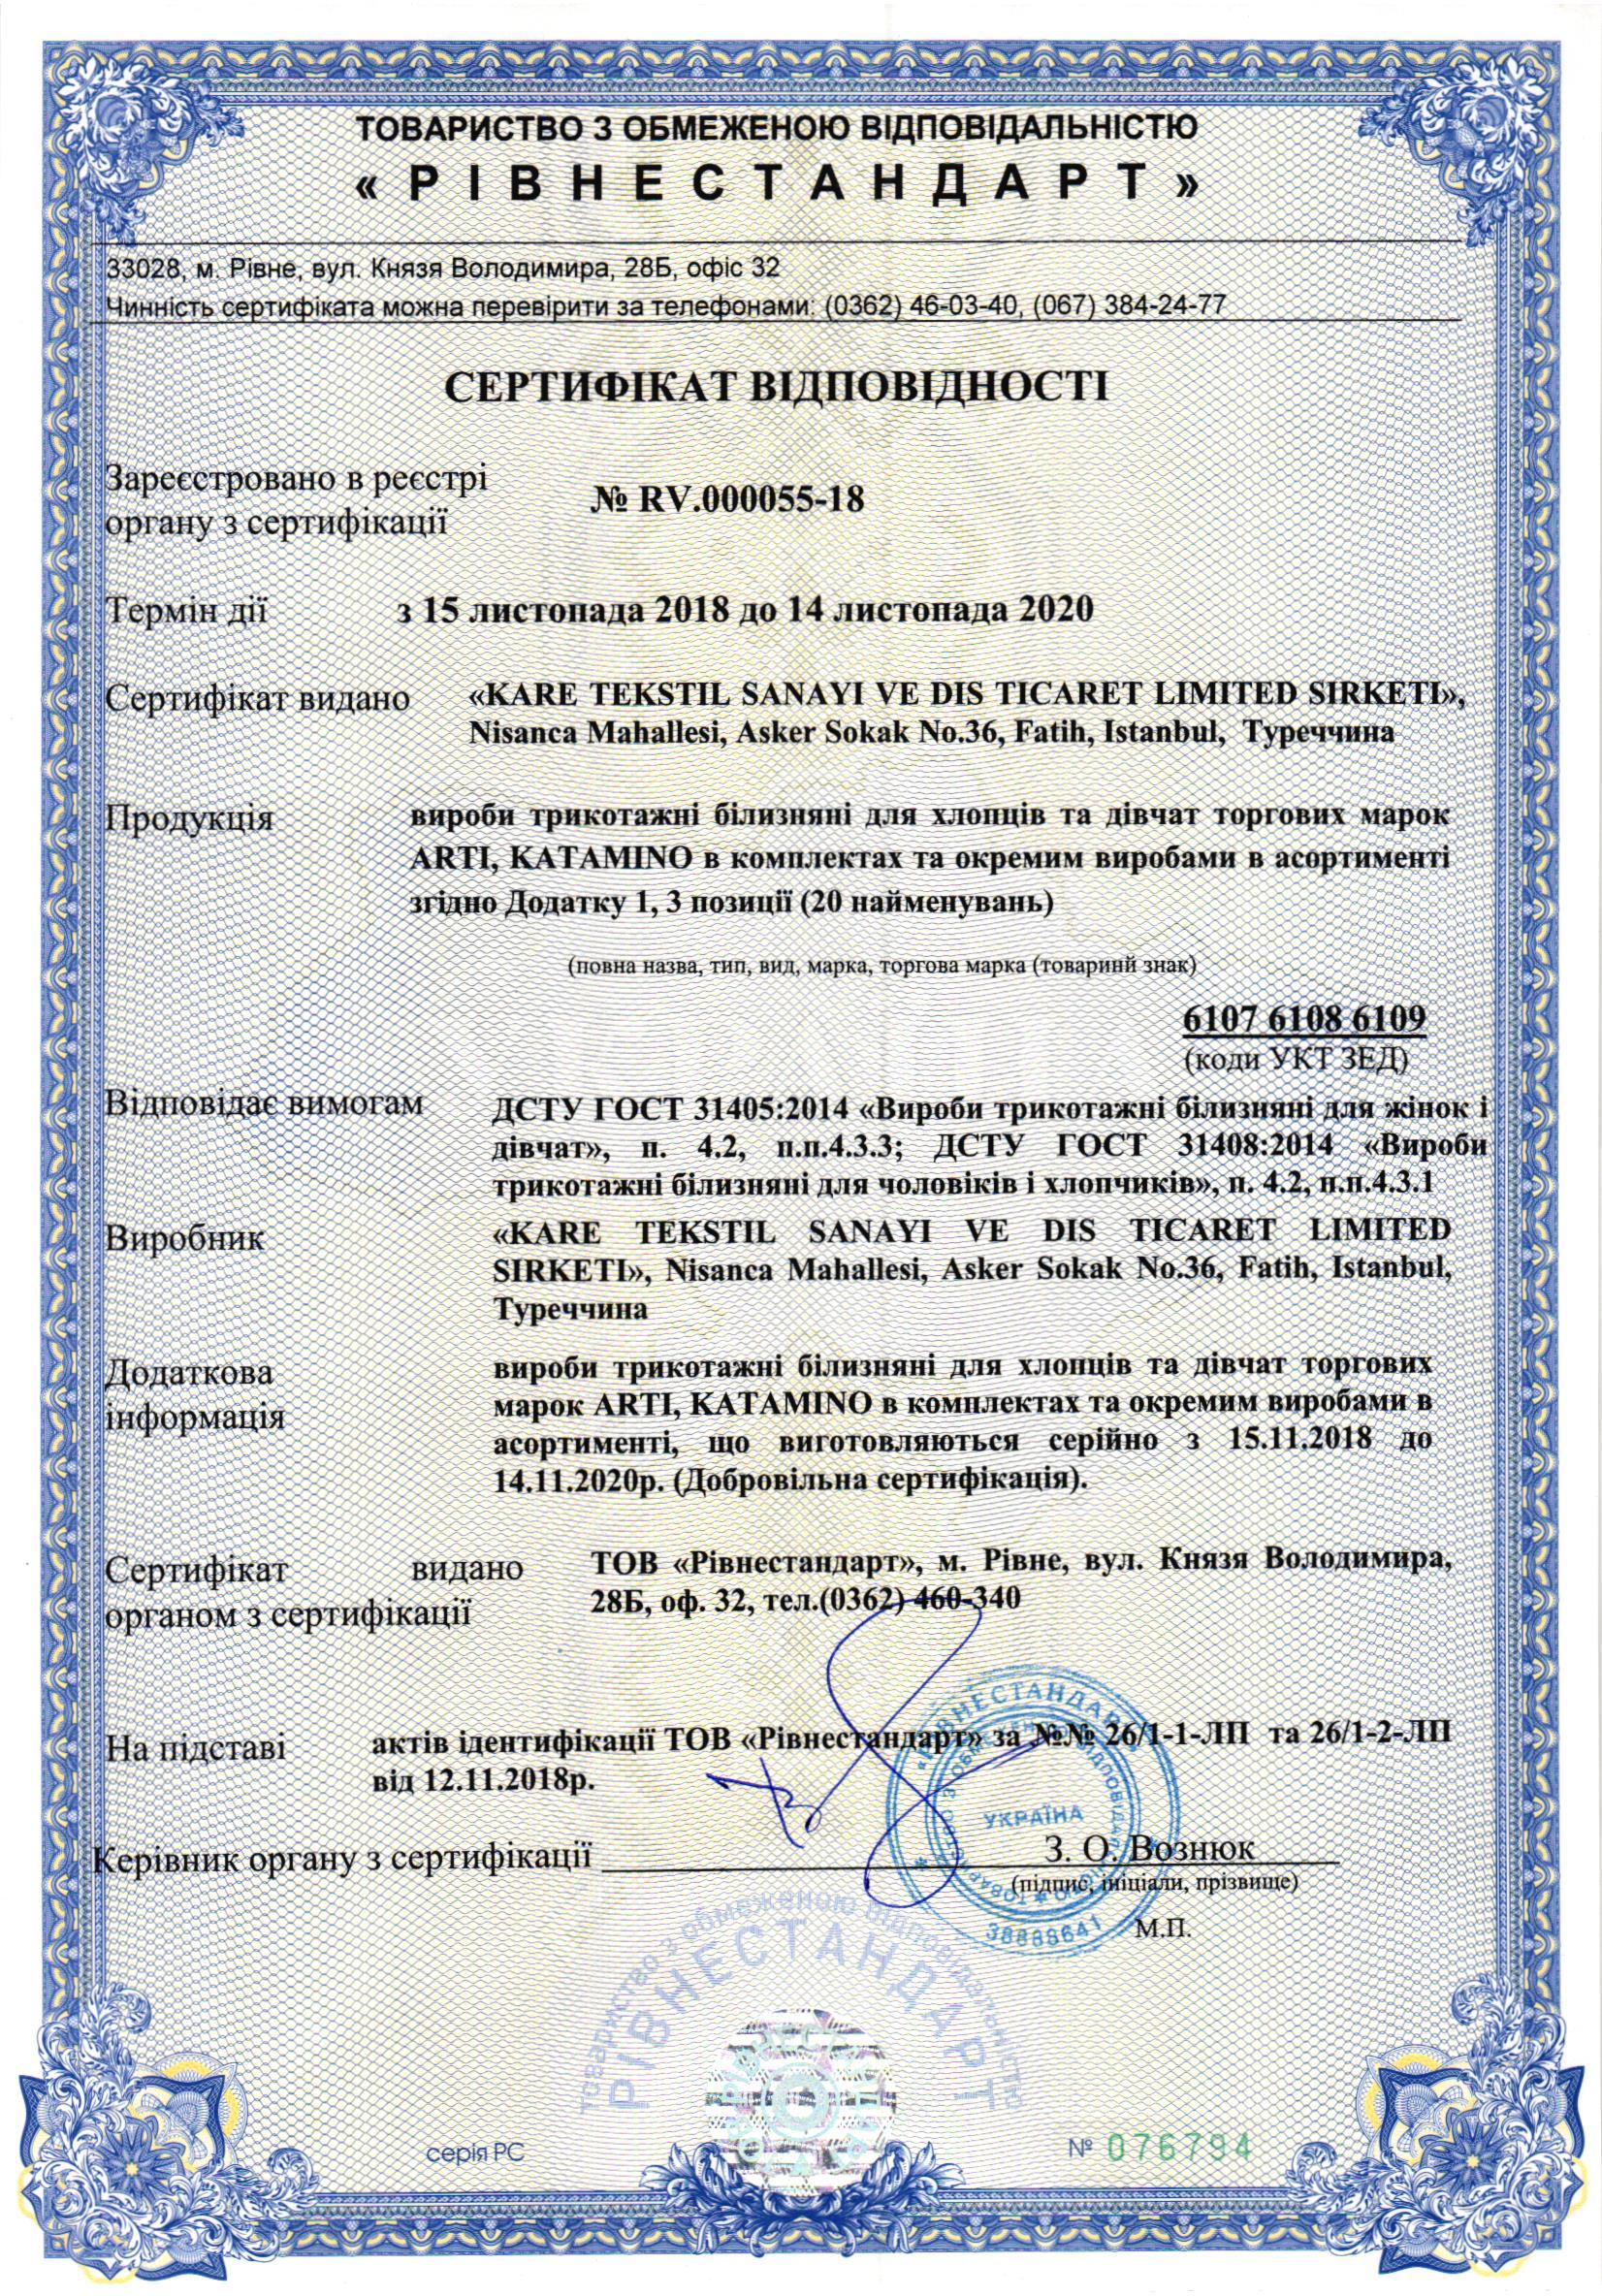 ukrayna-sertifika (1).jpg (1.07 MB)